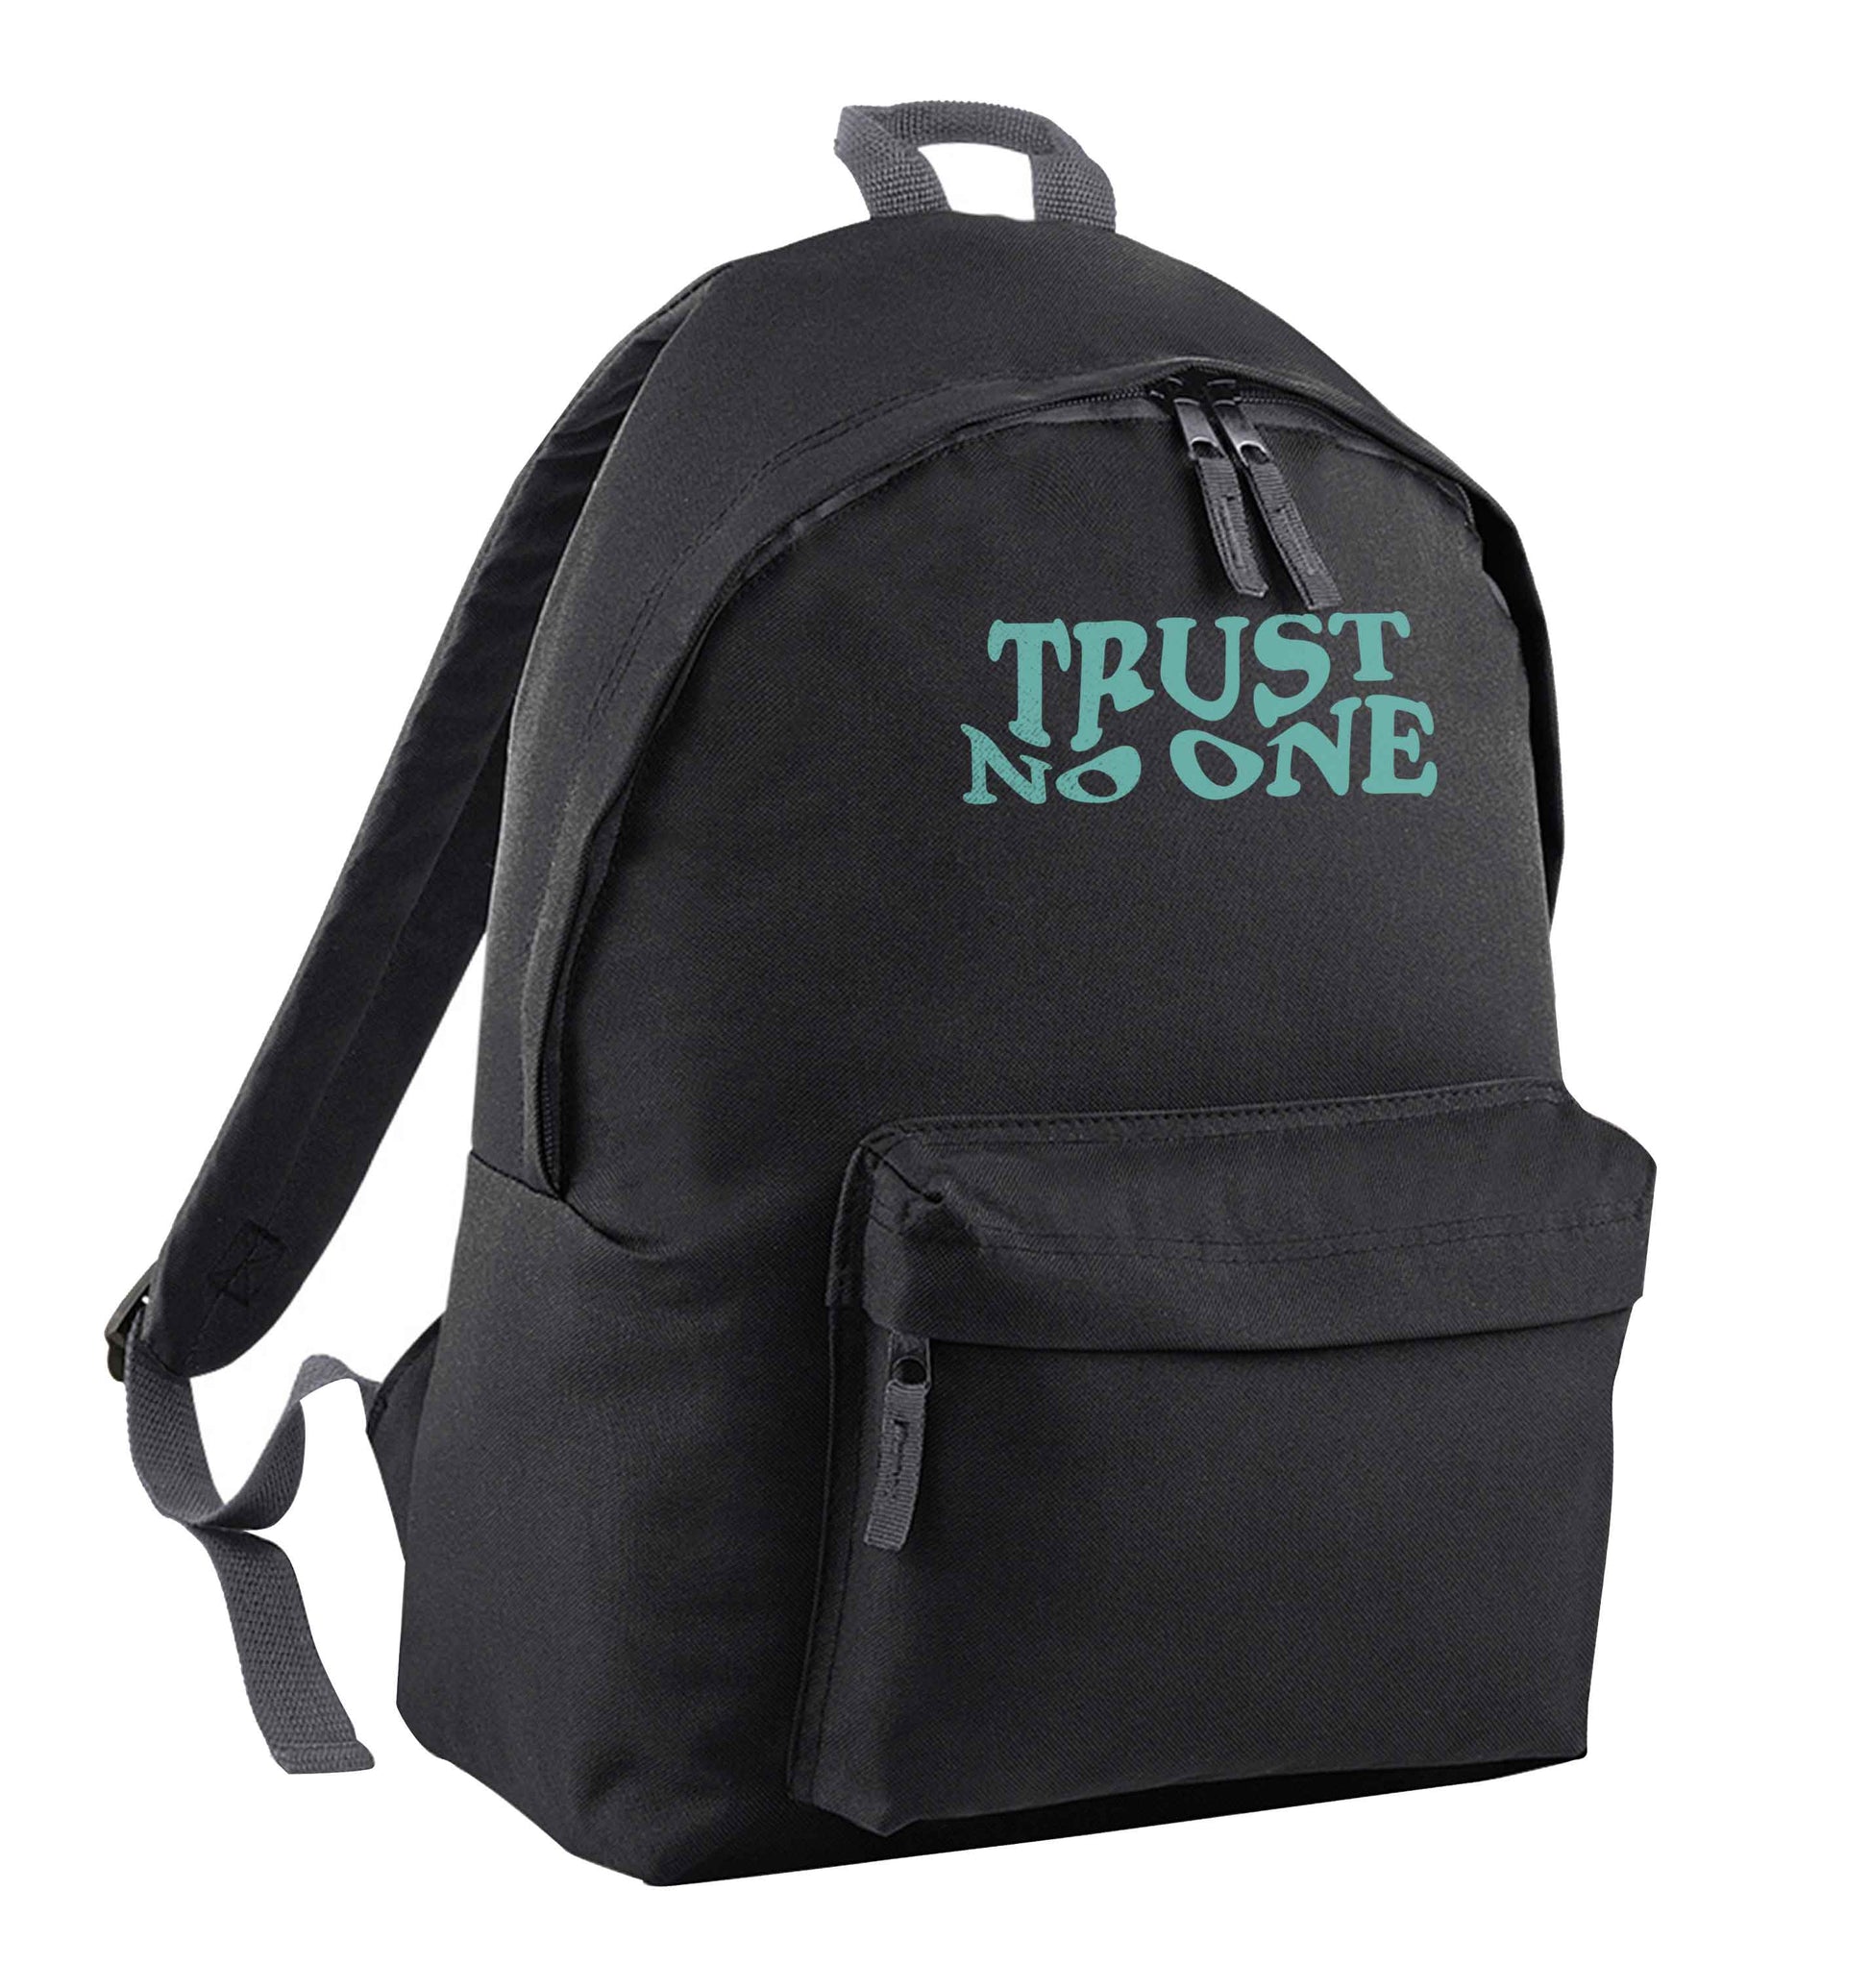 Trust no one black children's backpack